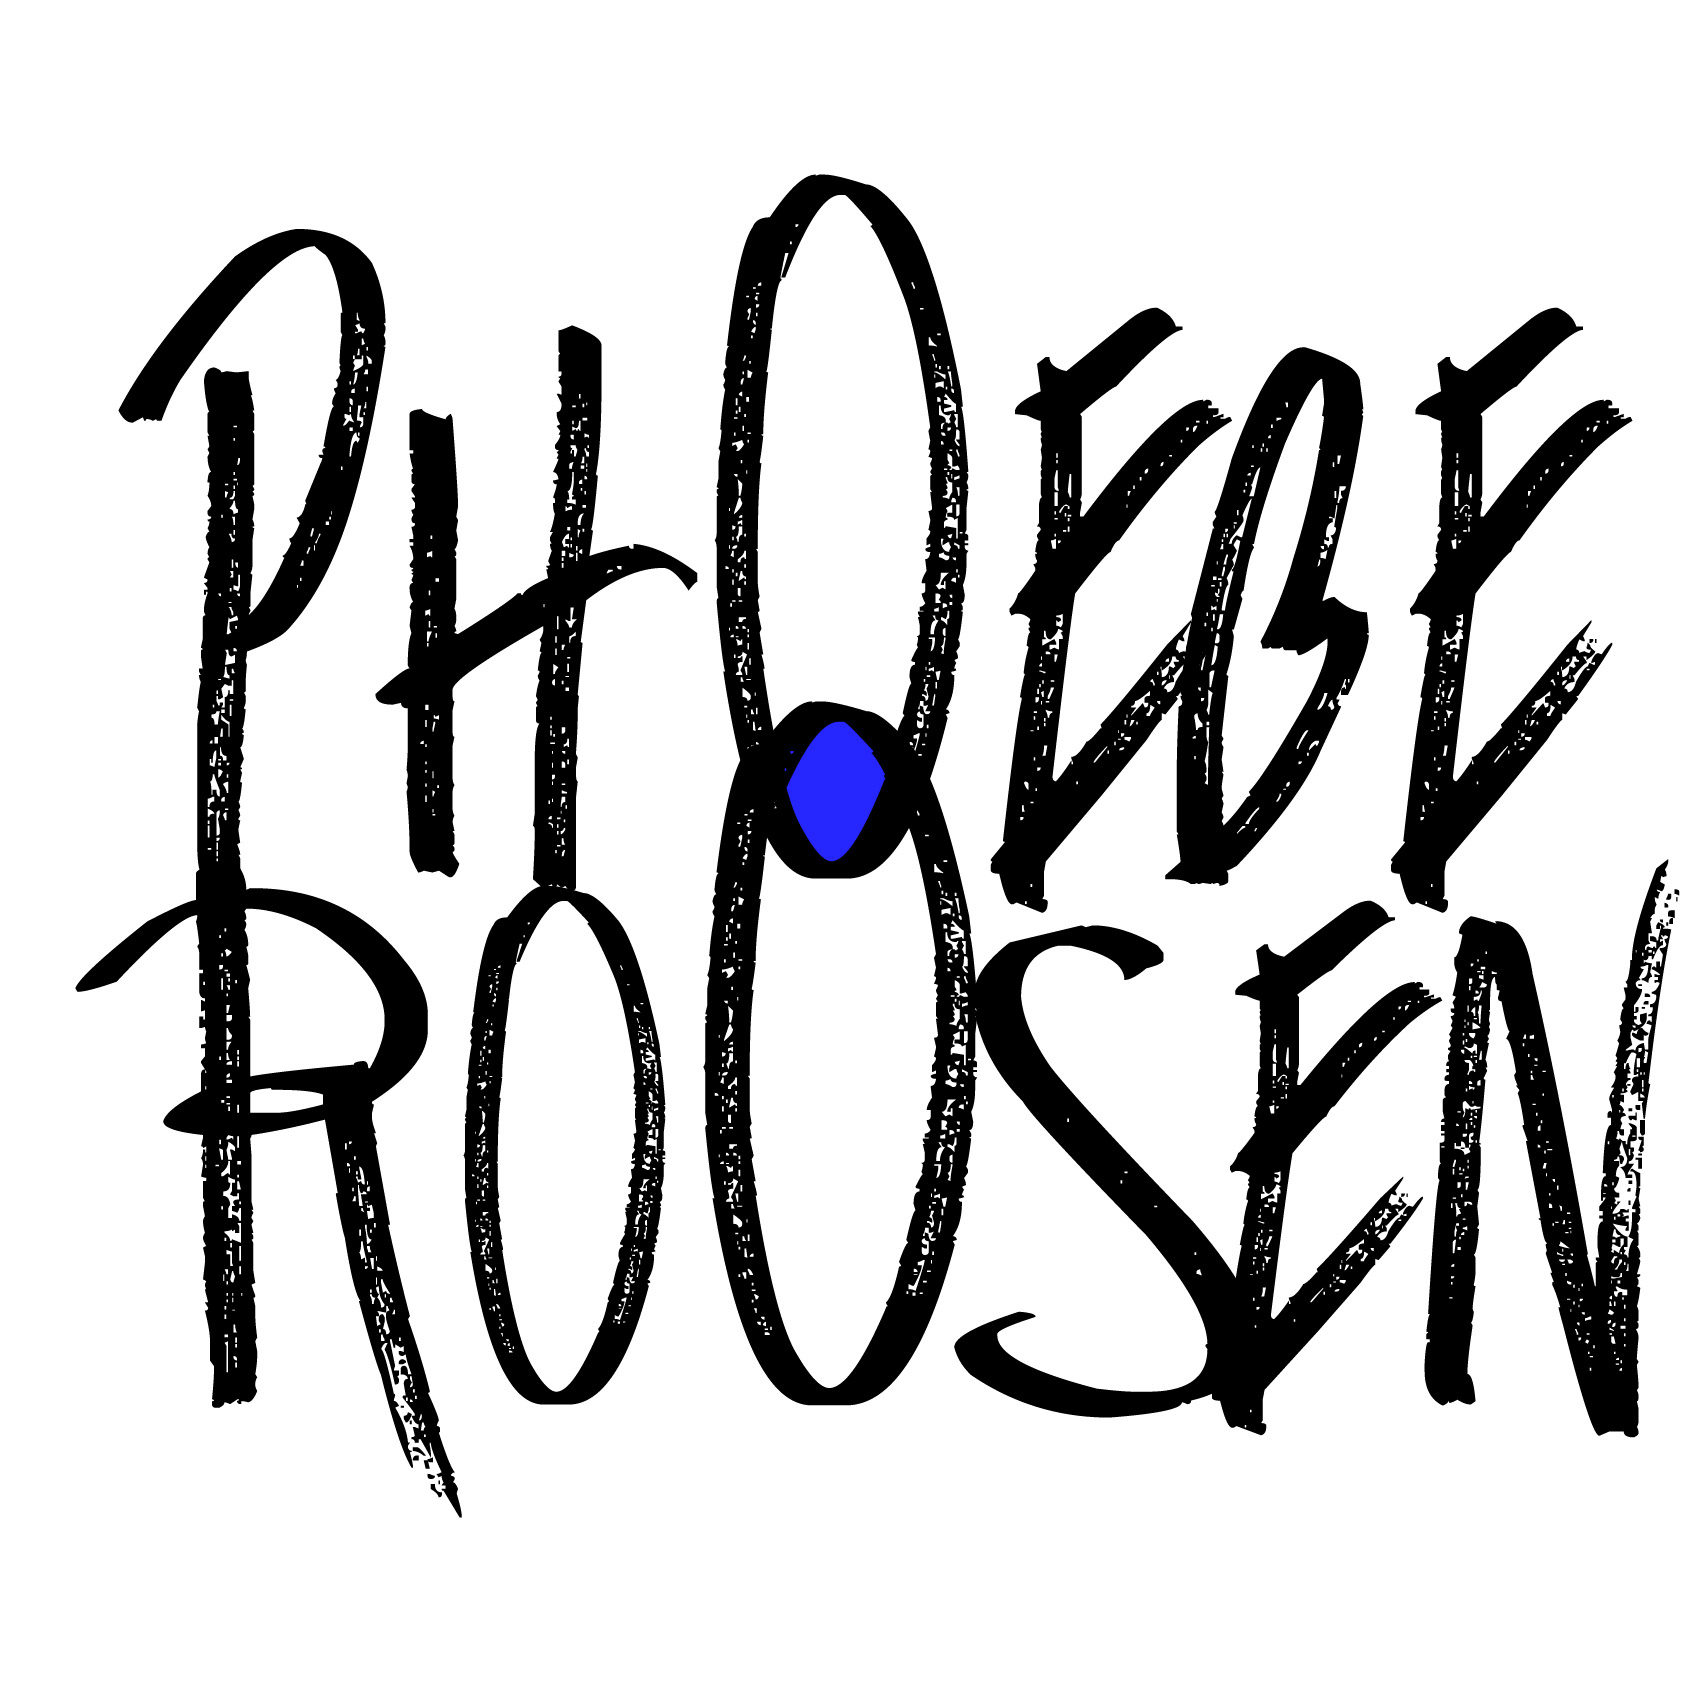 Phoebe Roosen